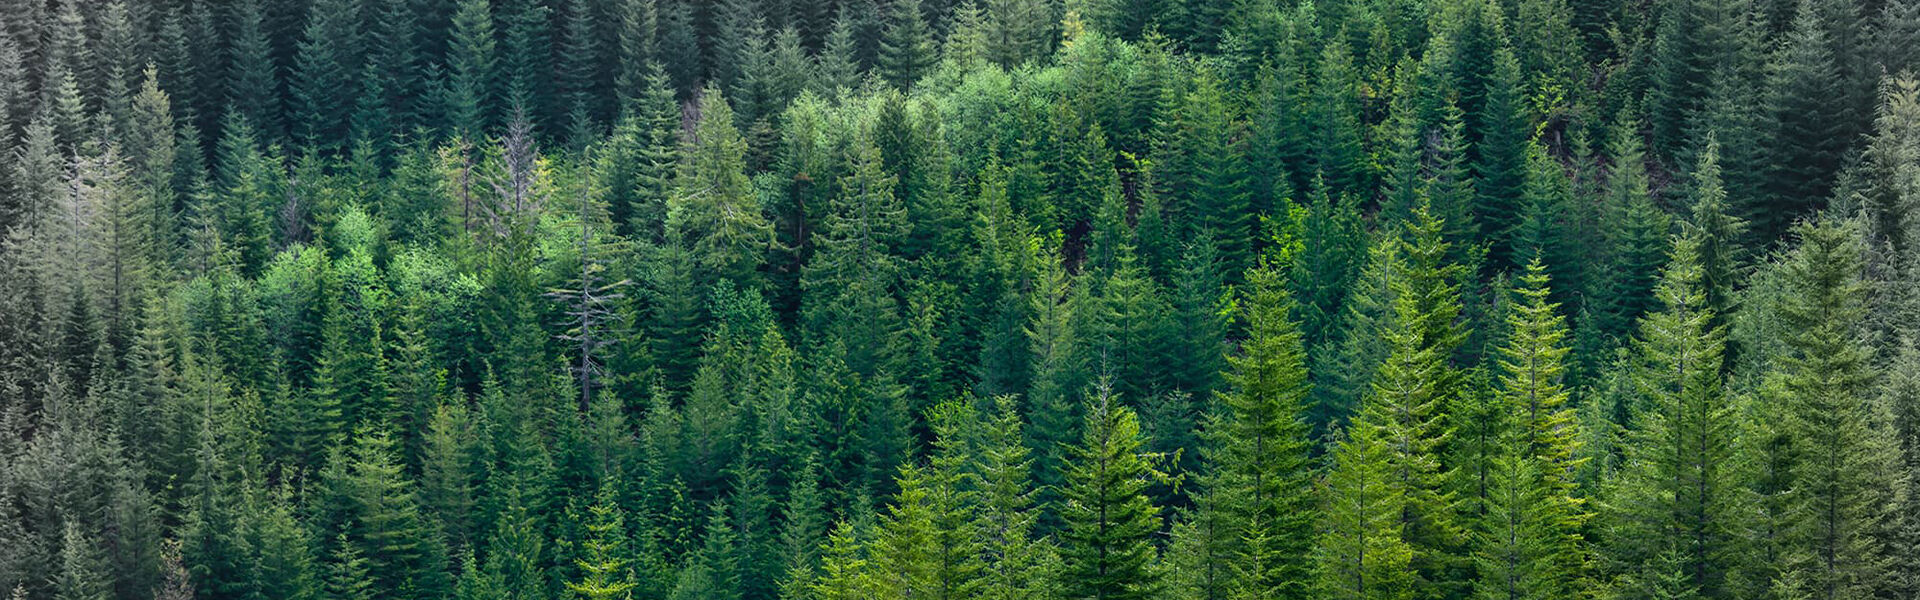 A closeup photograph of pine trees.